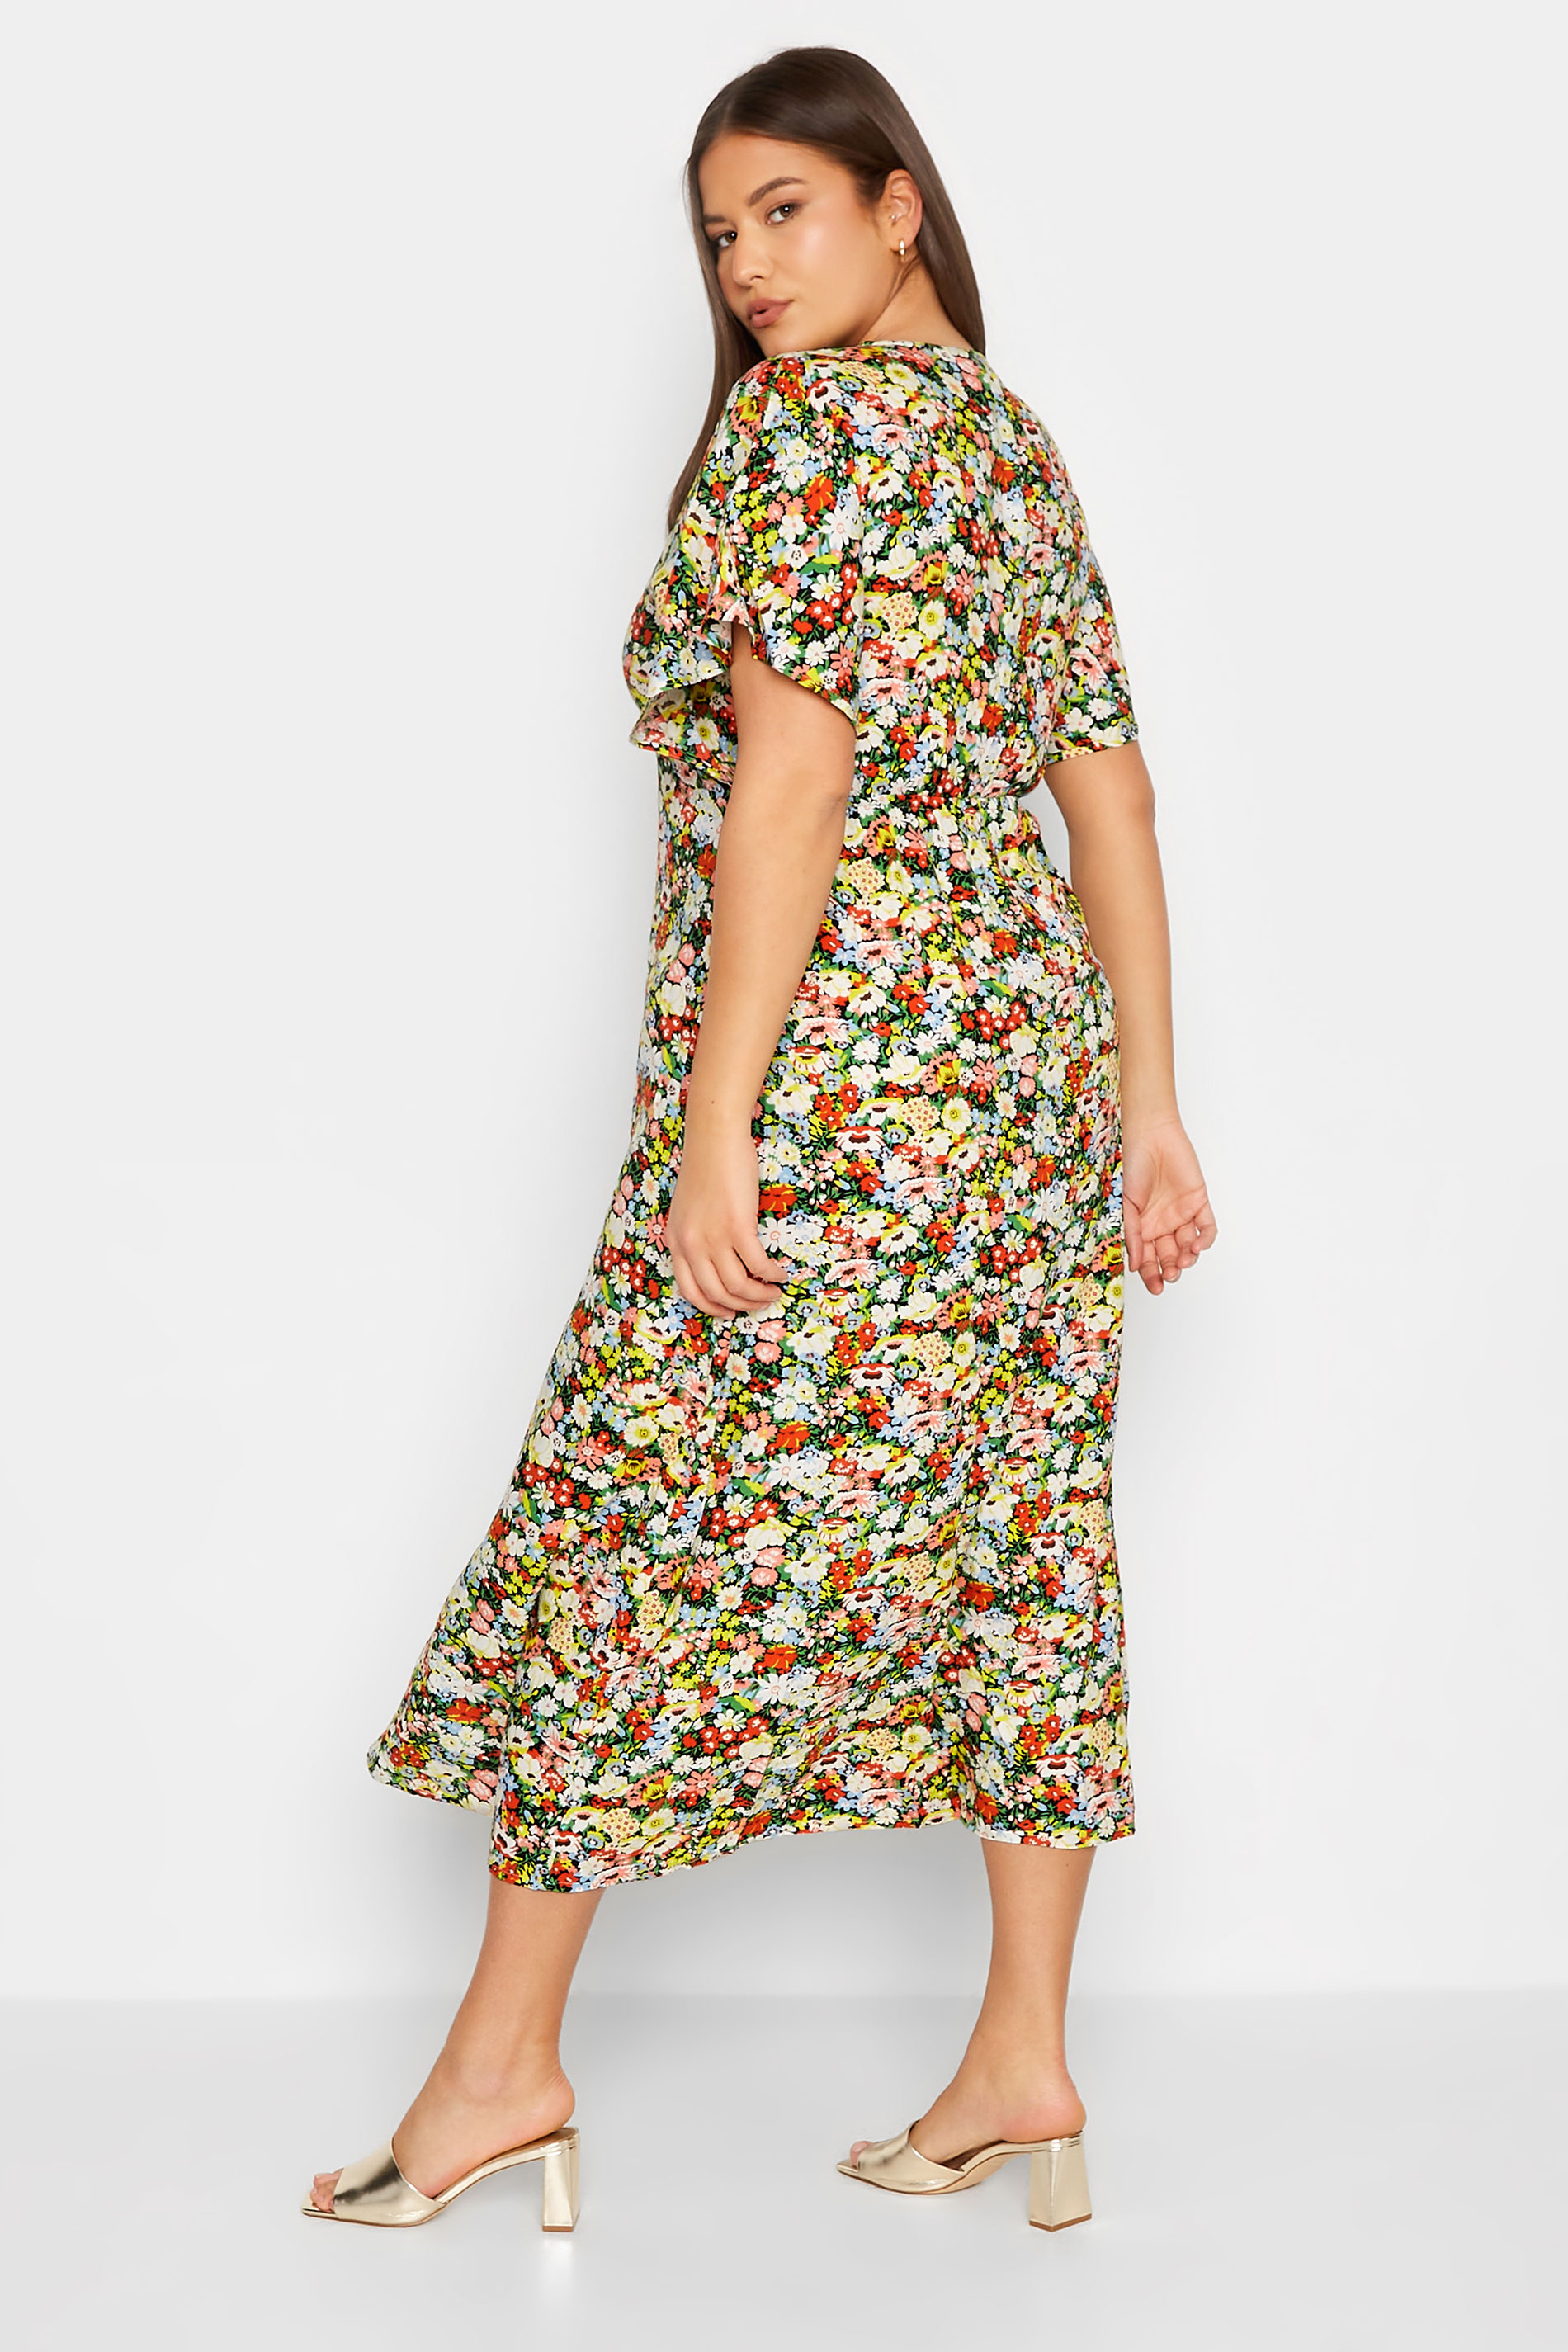 LTS Tall Women's Yellow Floral Print Split Front Midaxi Dress | Long Tall Sally 3